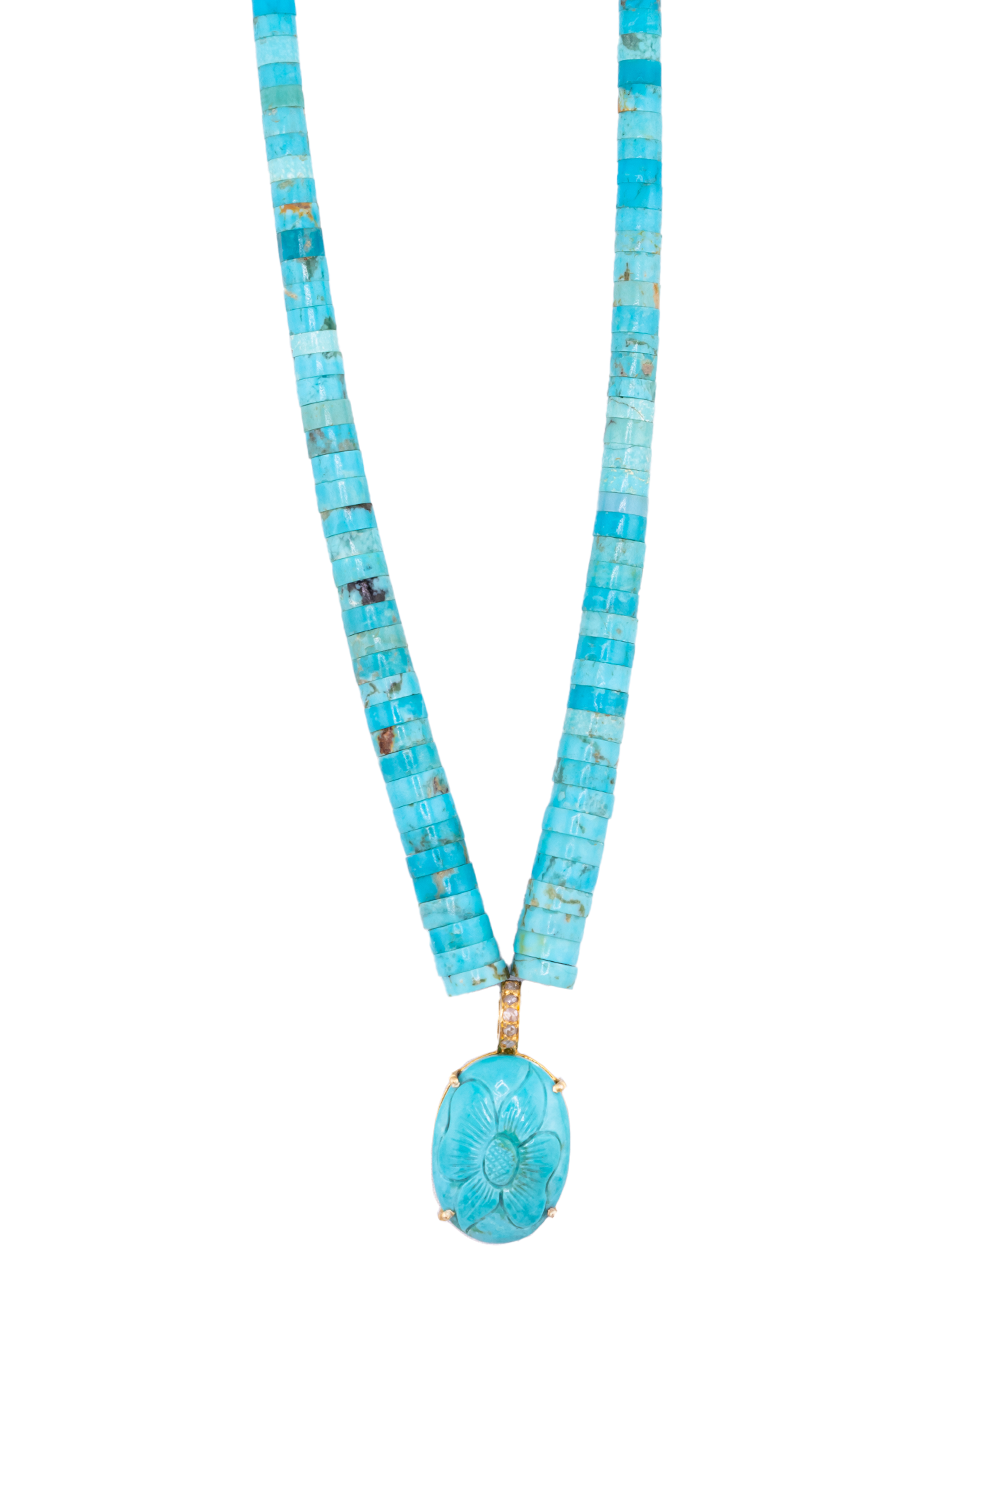 Pueblo Heishi Carved Turquoise Pendant Necklace